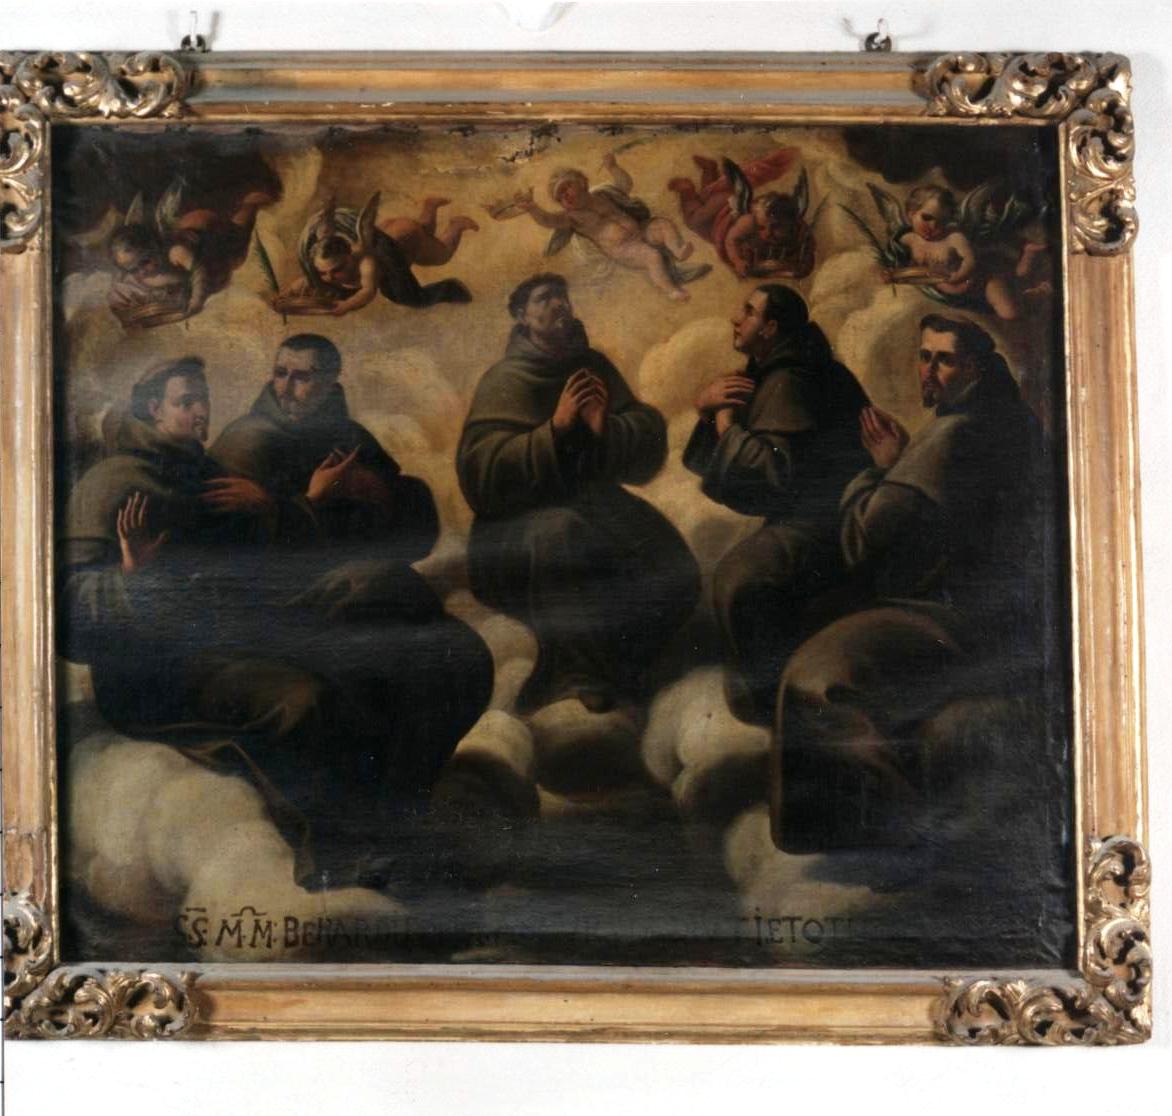 San bernardo, san pietro, accursio, sant'adiuto, sant'ottone., protomartiri francescani del marocco (dipinto)